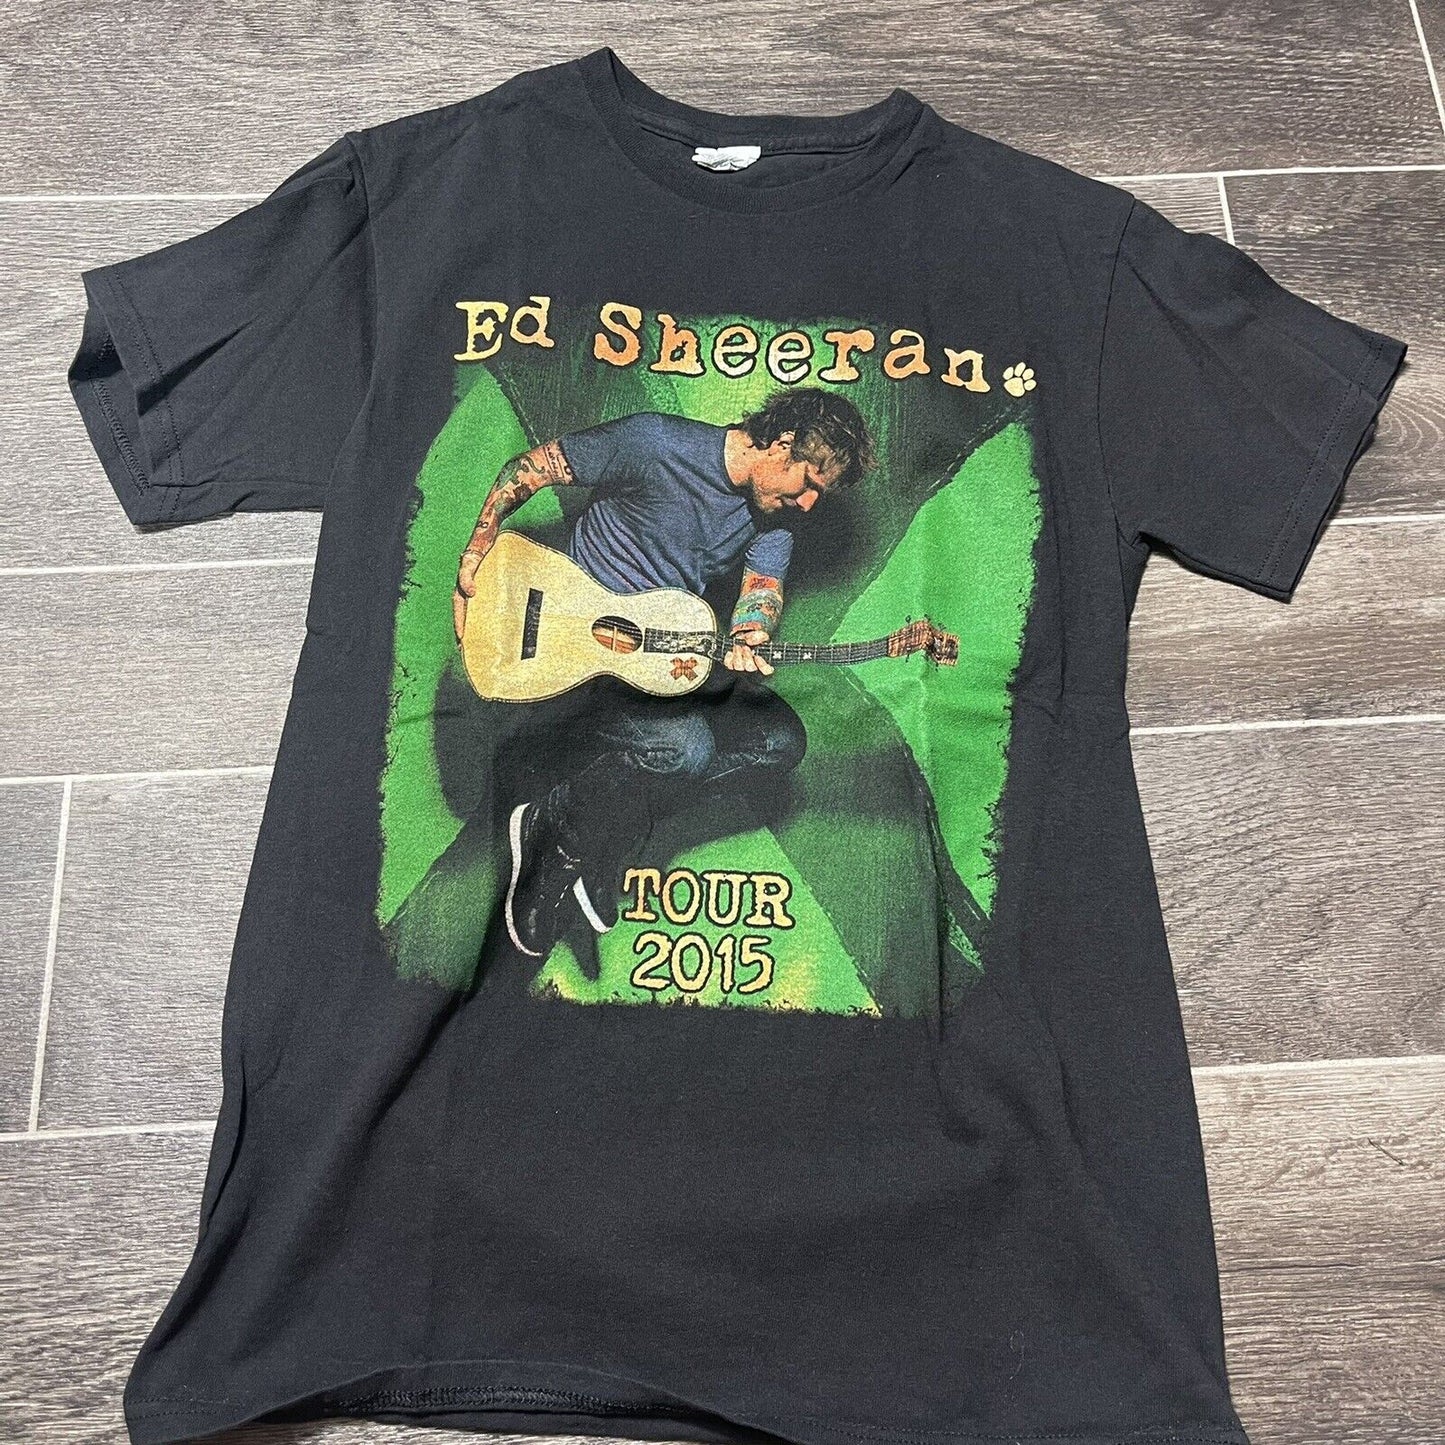 Ed Sheeran 2015 Tour Shirt Small